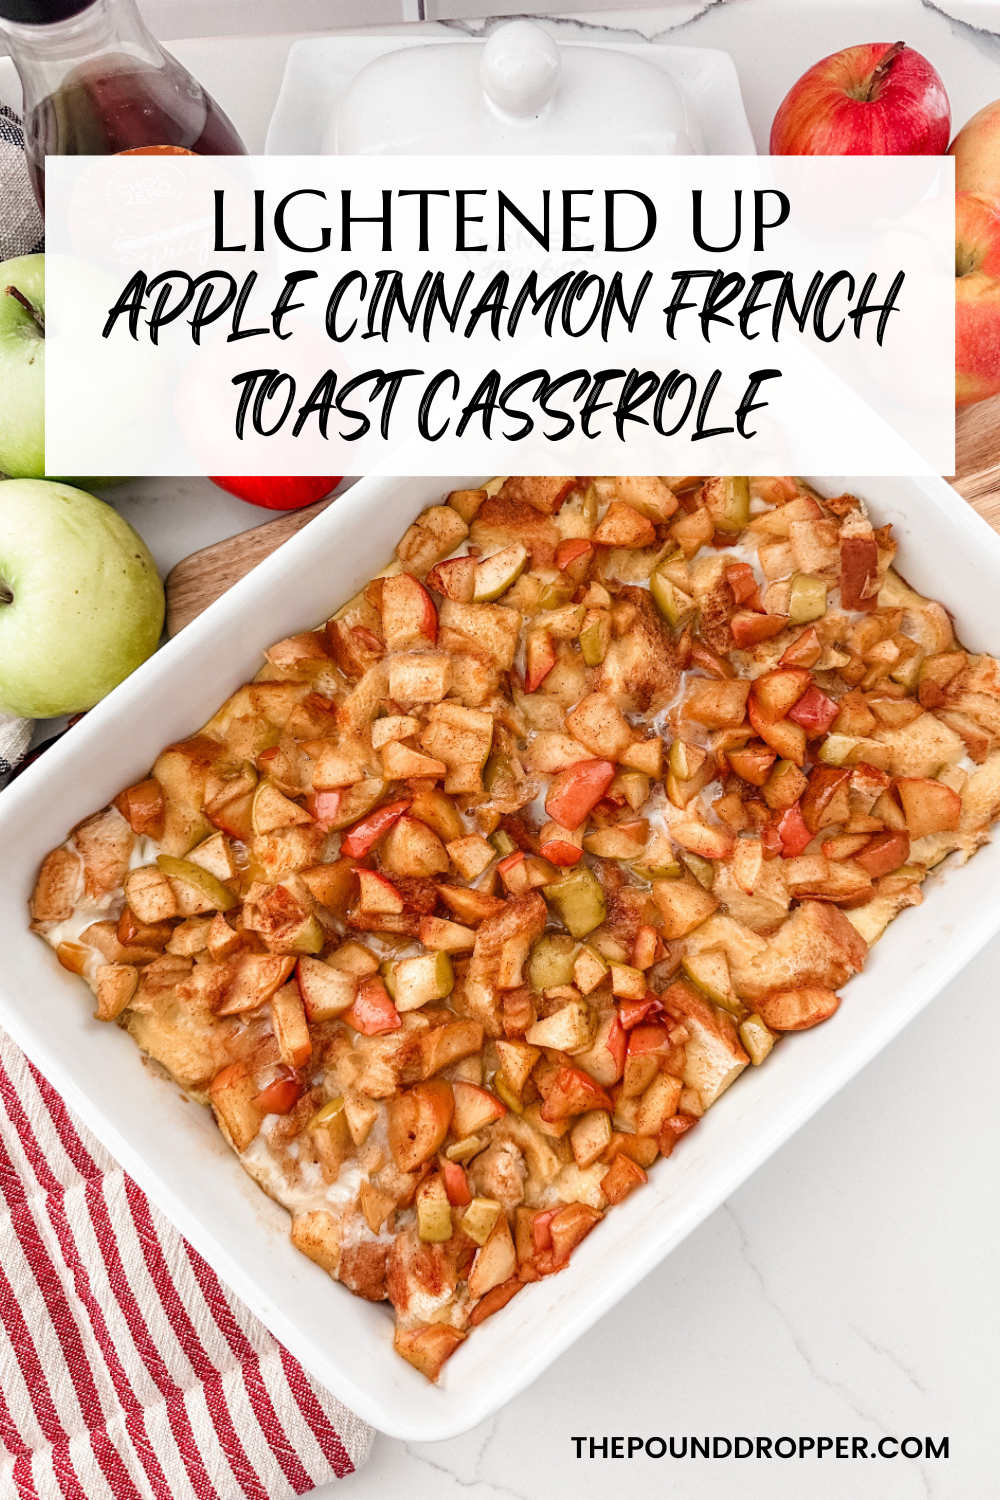 Lightened Up Apple Cinnamon French Toast Casserole  via @pounddropper